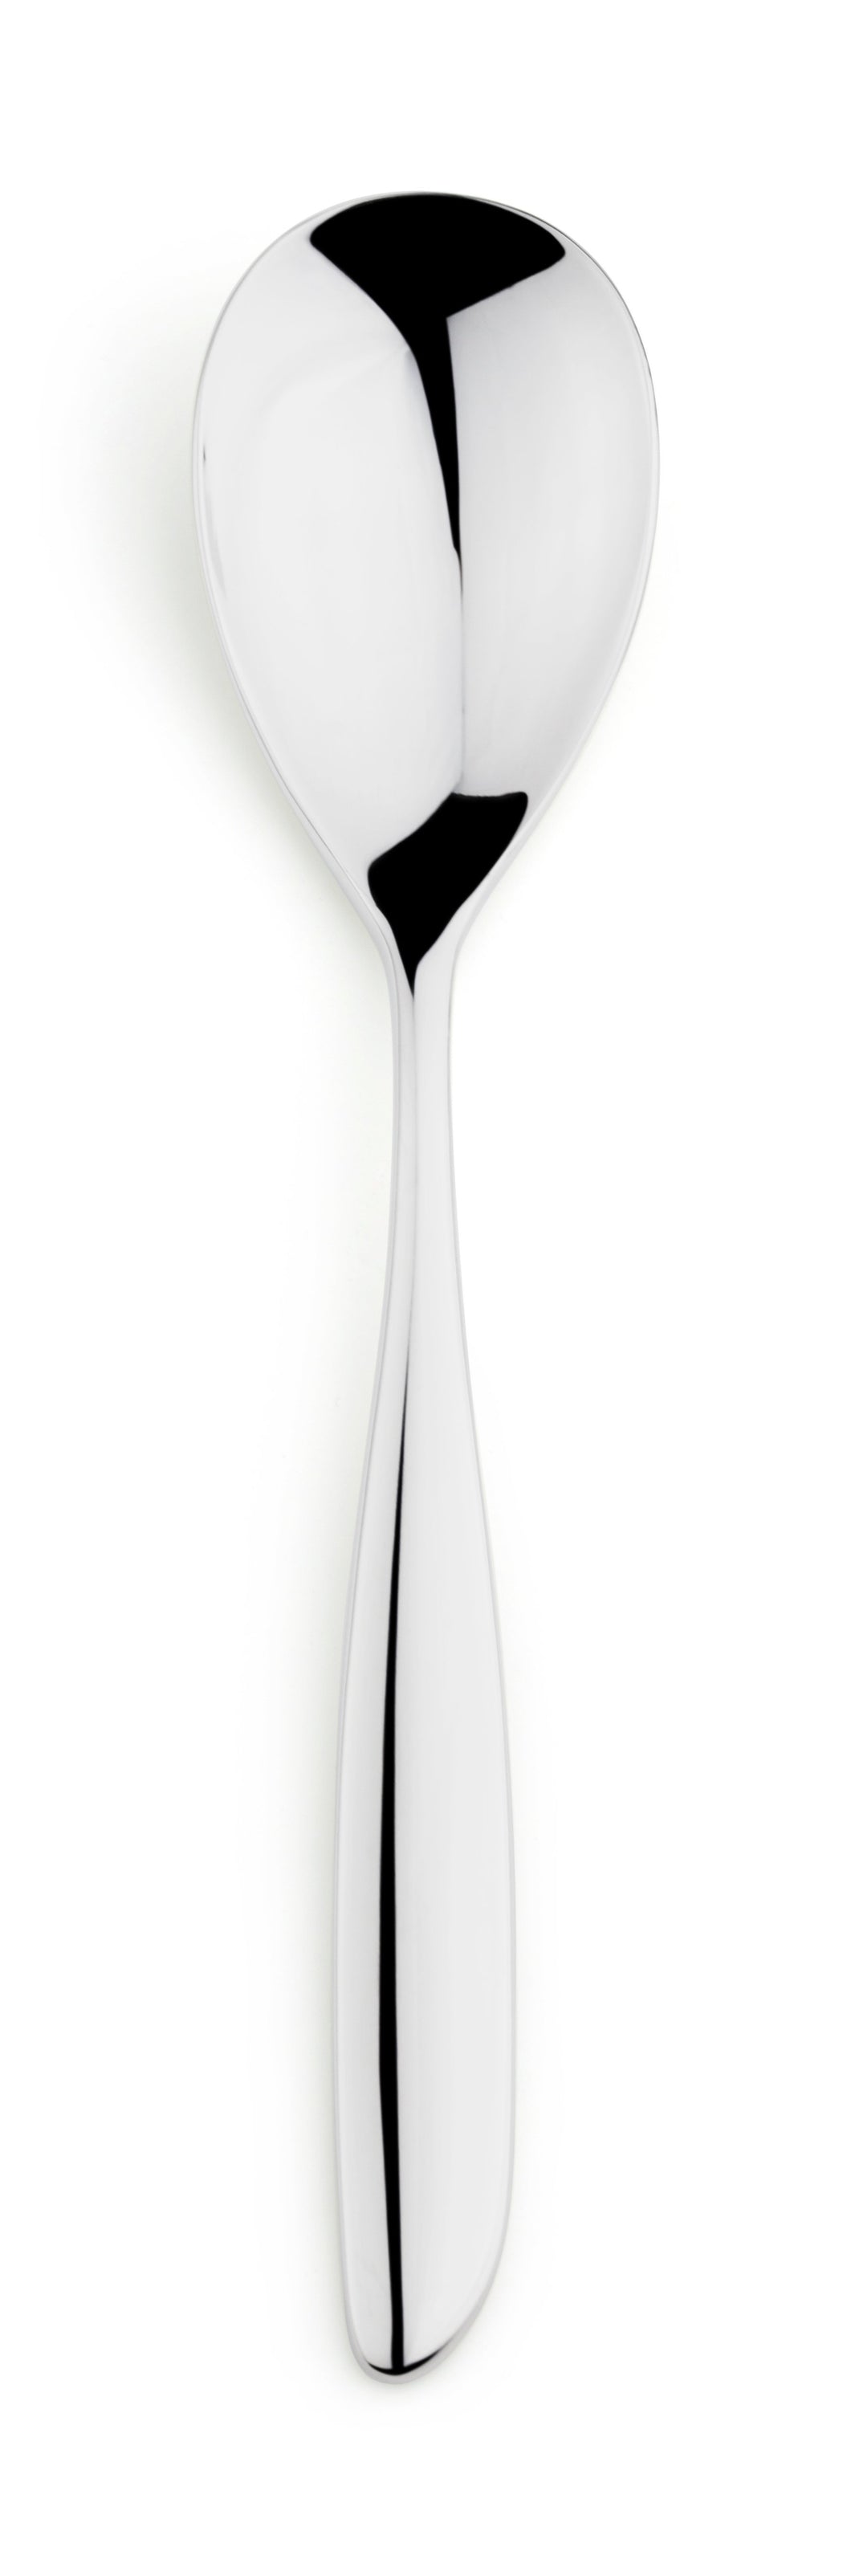 Effra Table Spoon